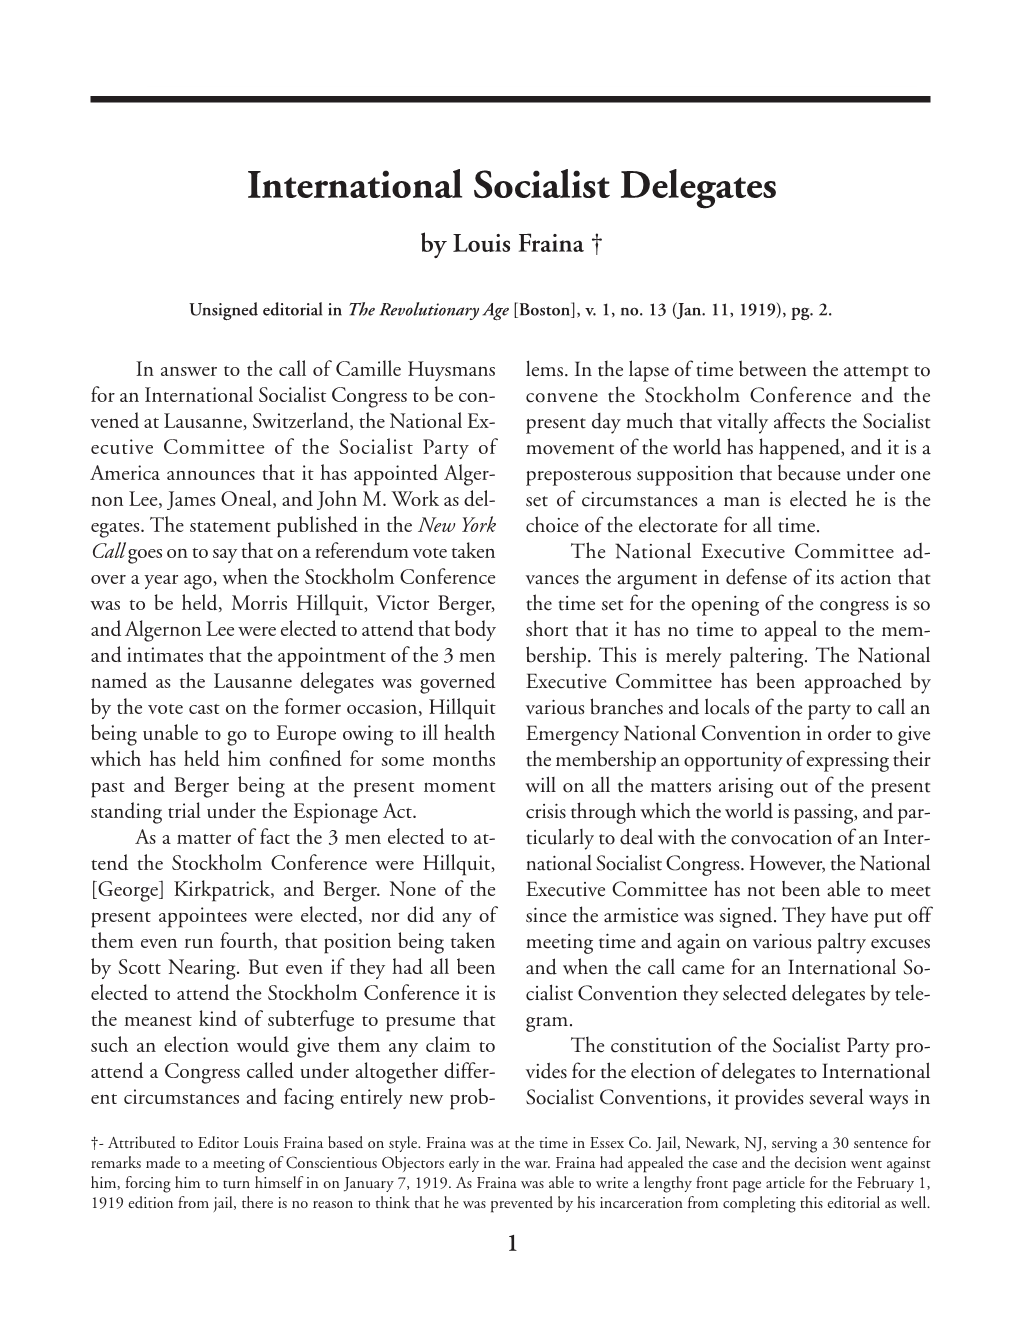 International Socialist Delegates [Jan